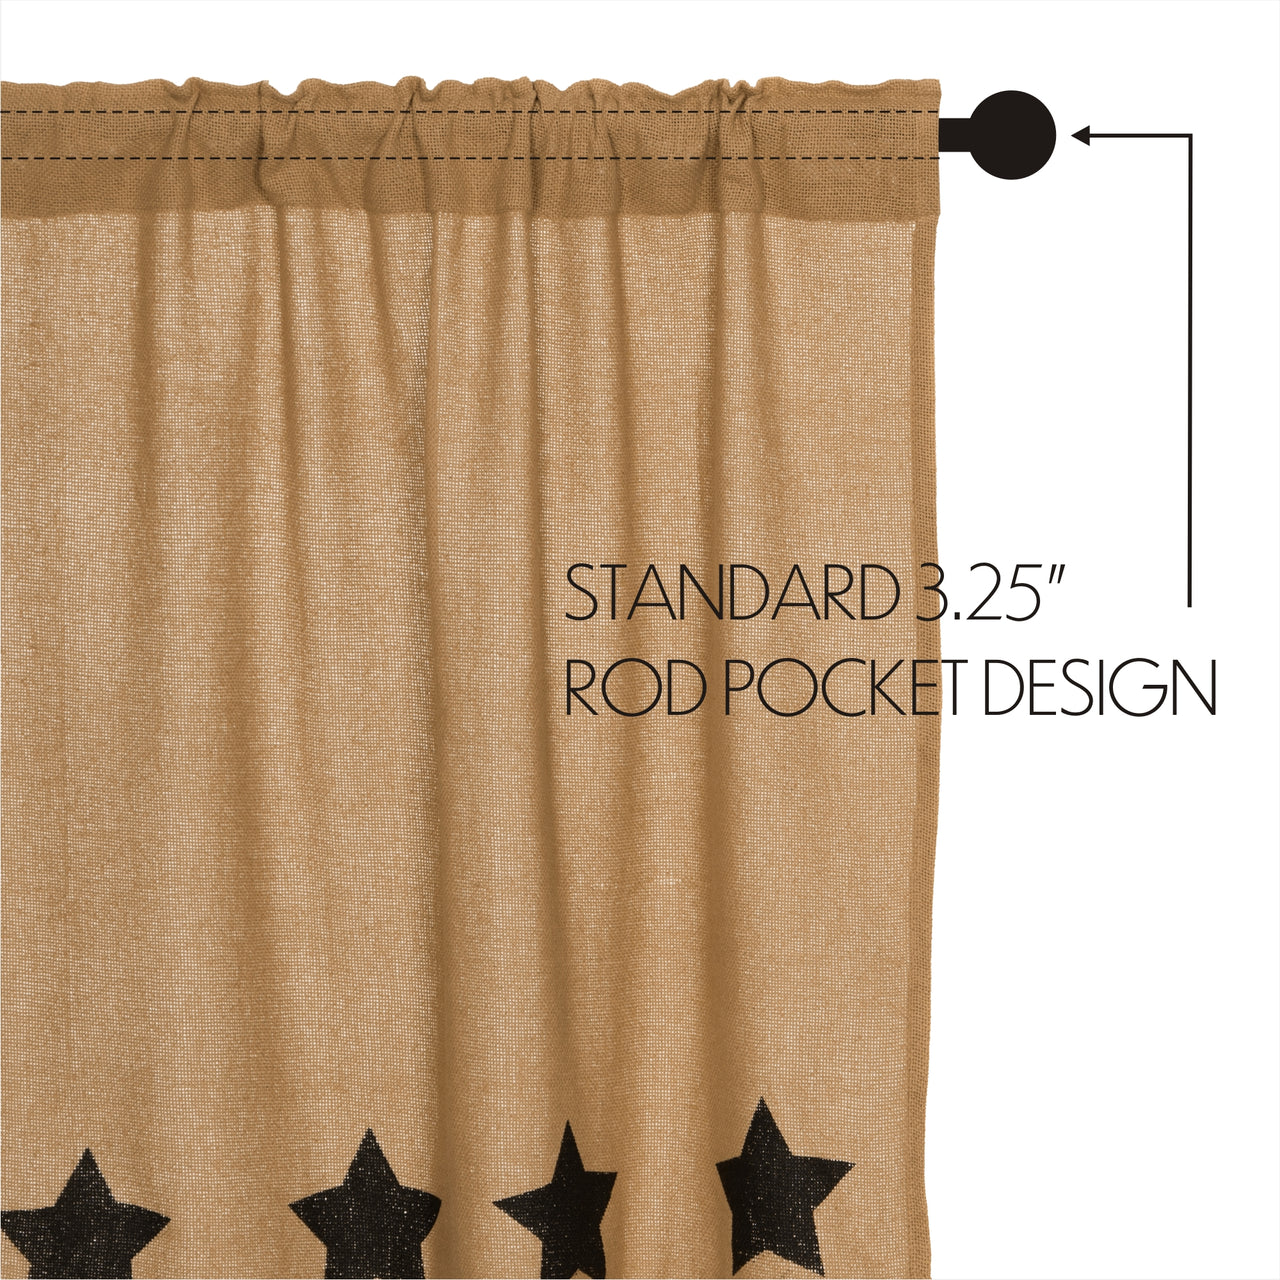 Burlap w/Black Stencil Stars Prairie Swag Curtain Set of 2 36x36x18 VHC Brands